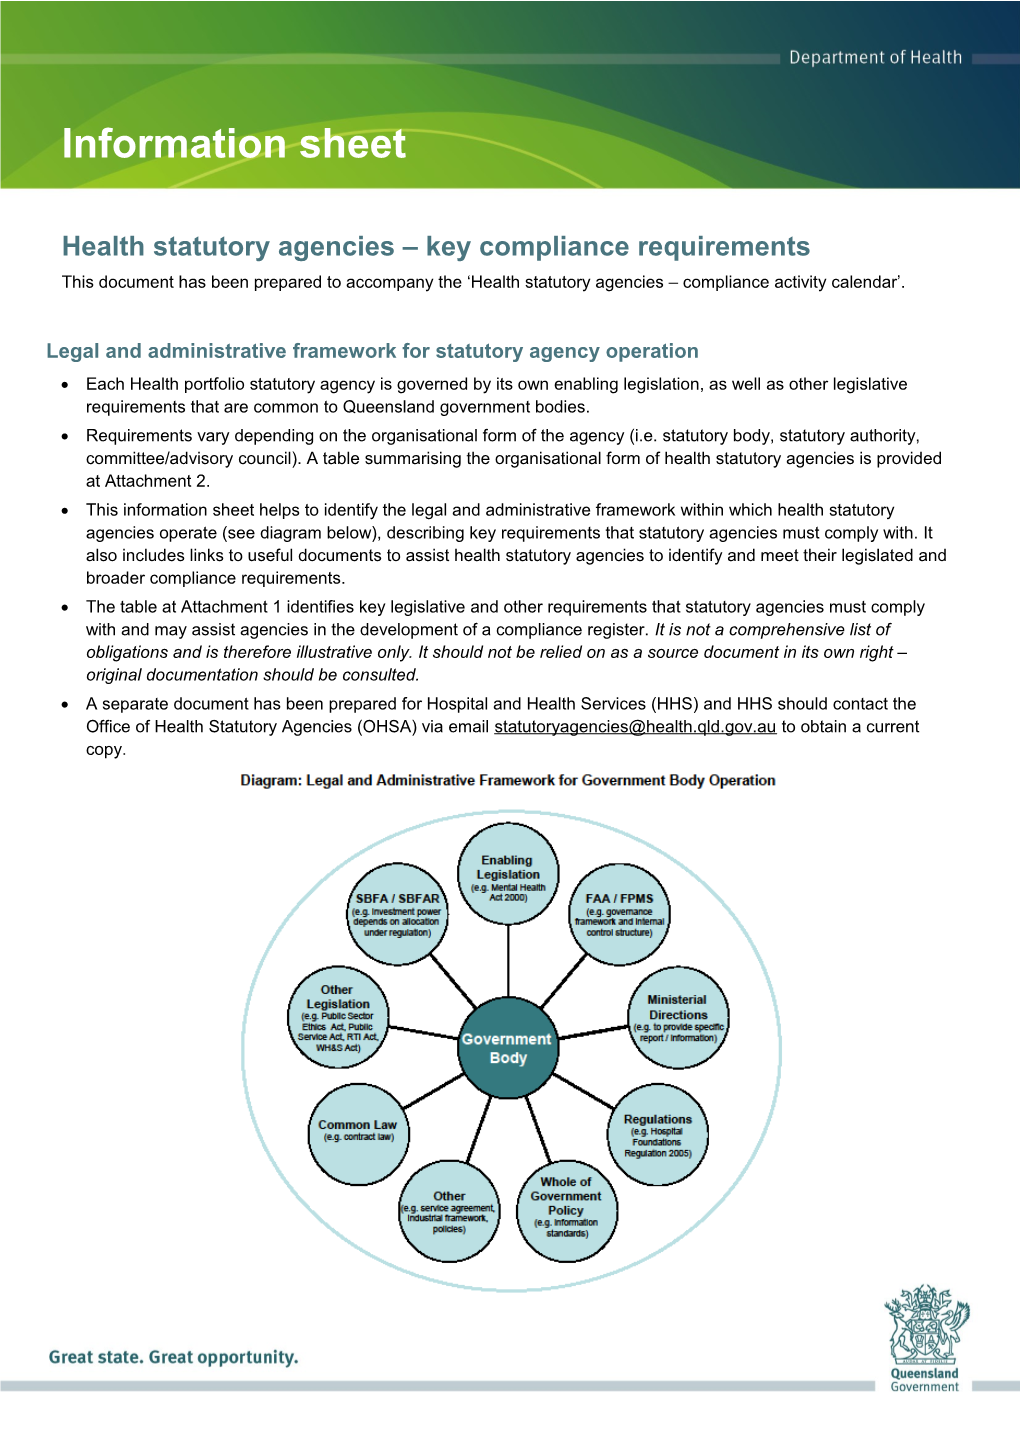 Information Sheet: Health Statutory Agencies - Key Compliance Requirements